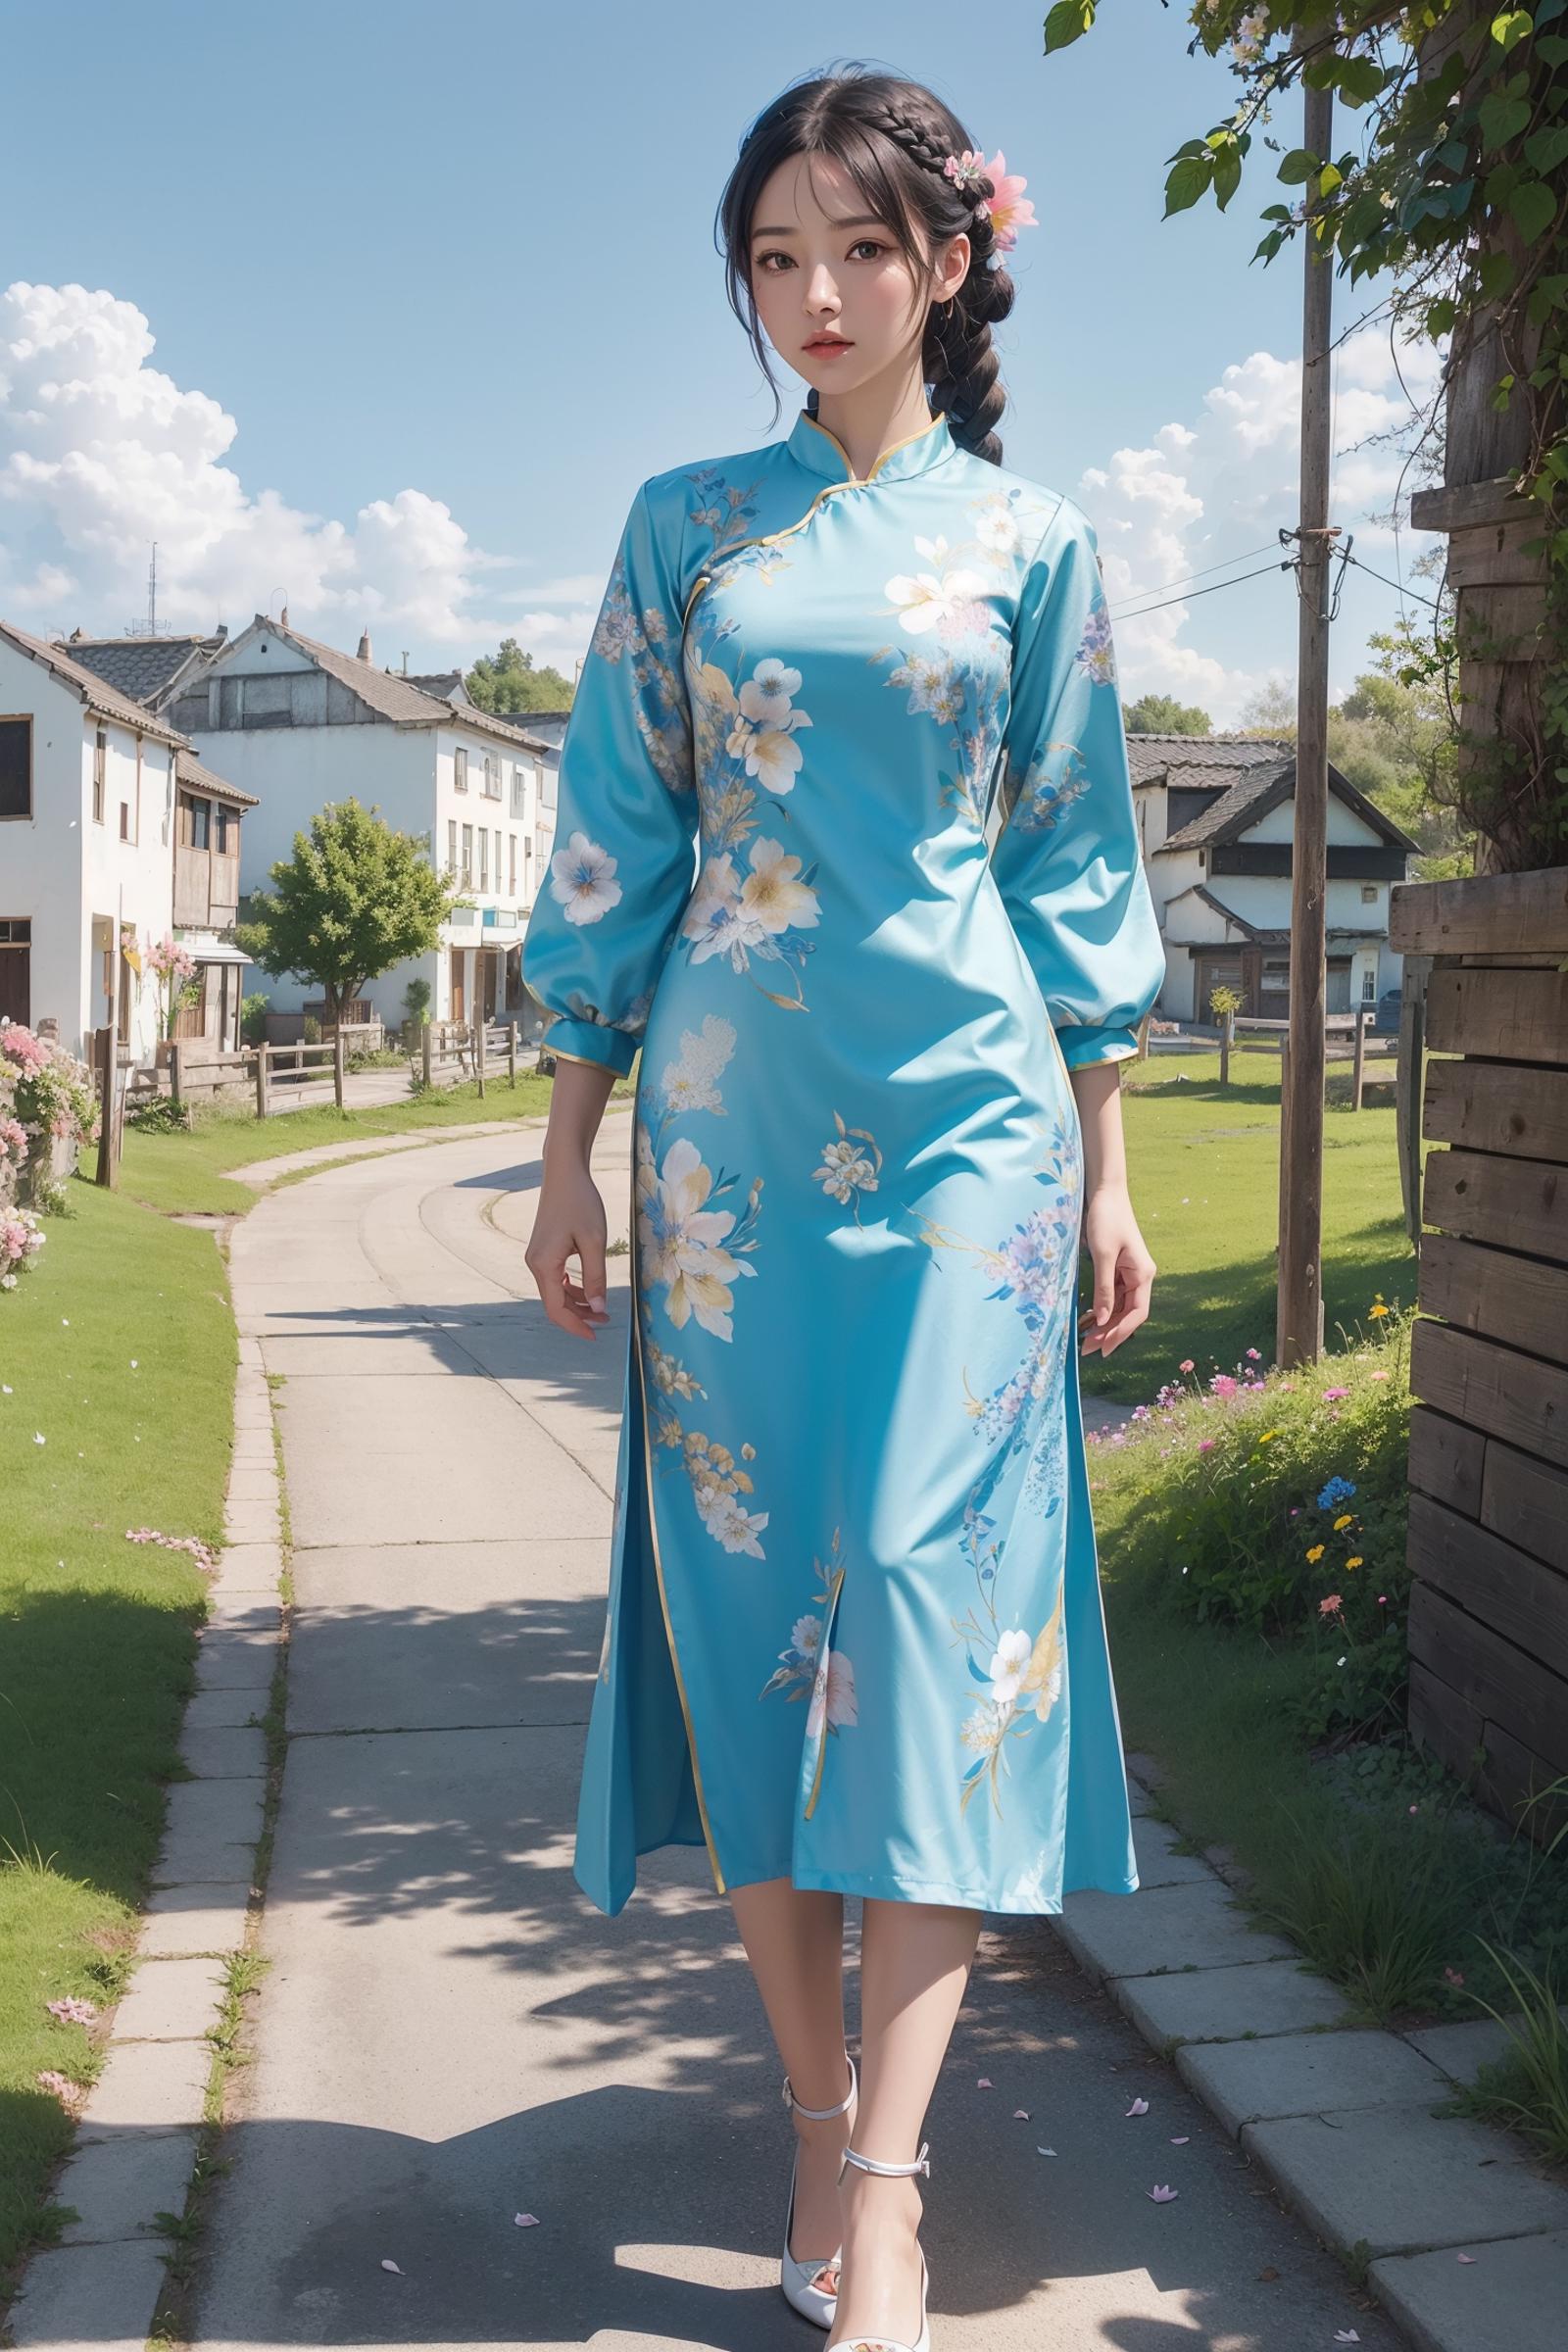 [Realistic&Anime] 旗袍 || ChinaDress image by AlexLai